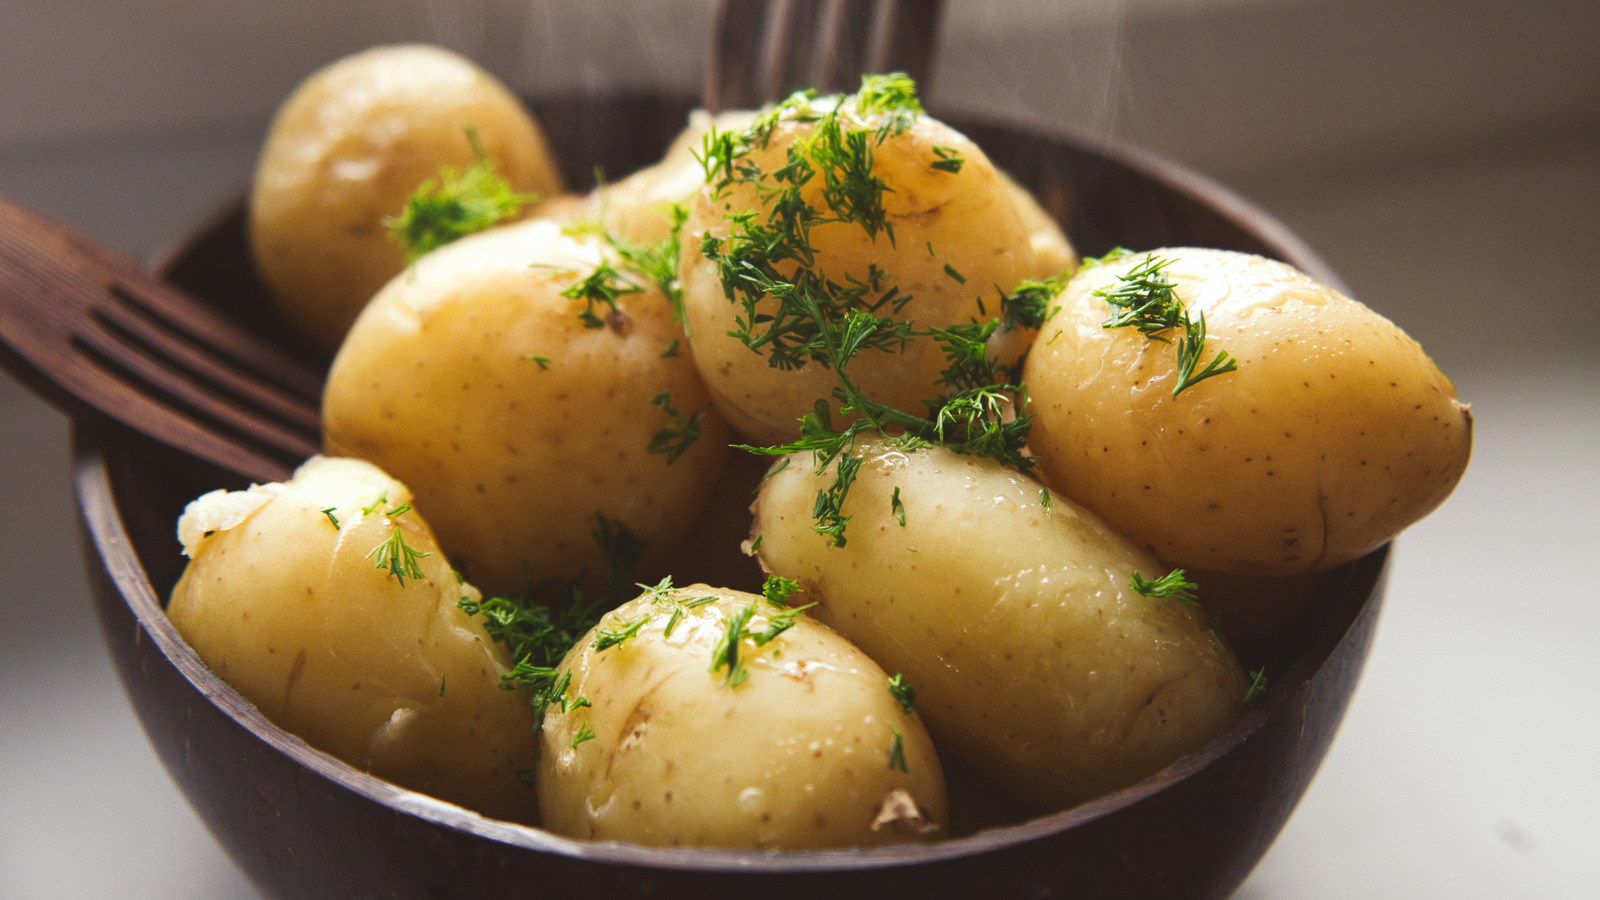 Steam potatoes or boil фото 10